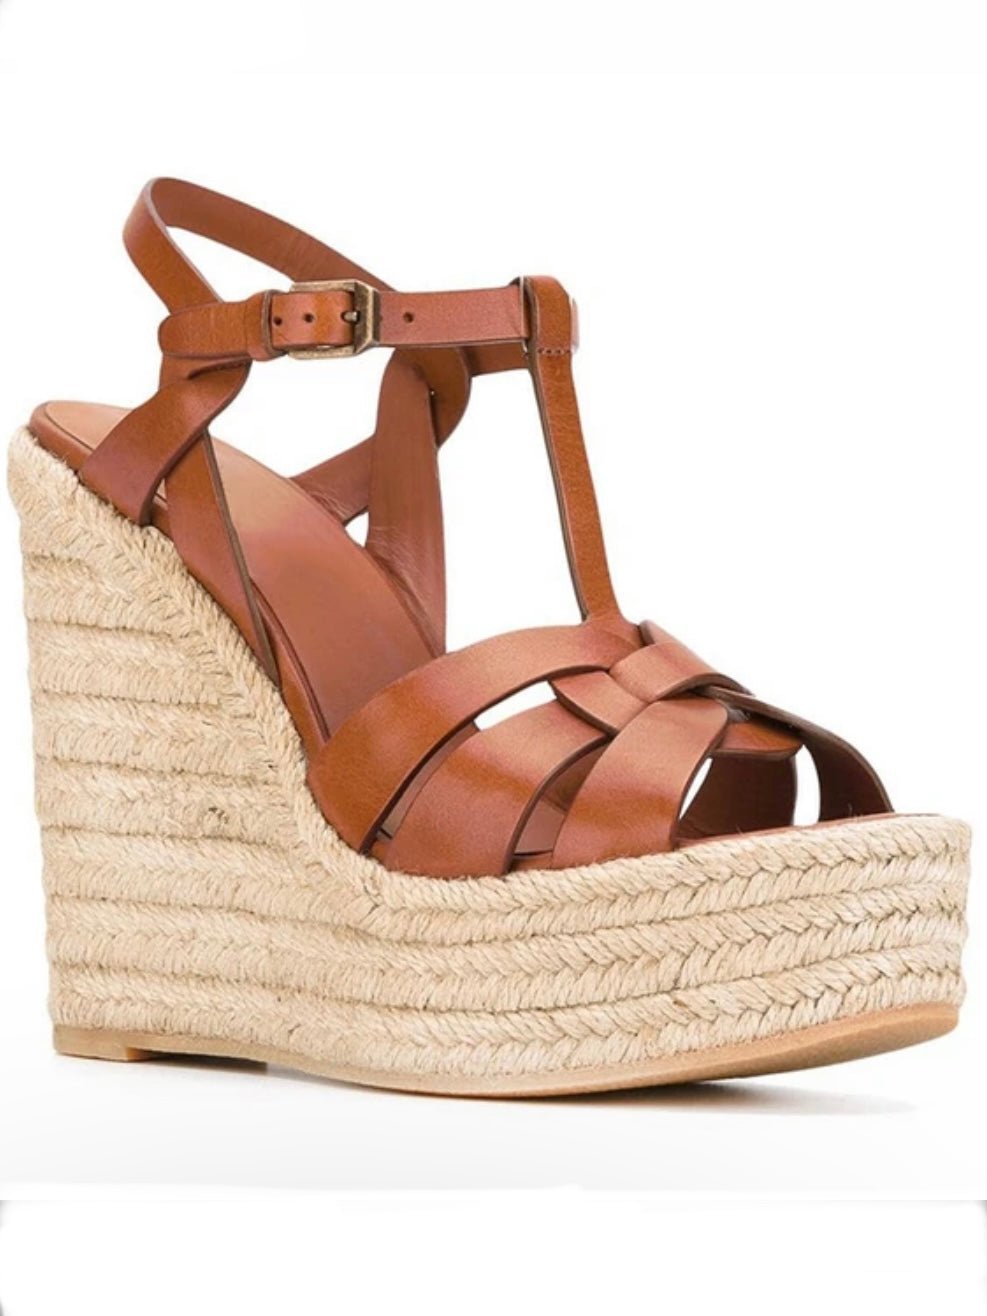 Brown wedge high heels sandals - Wapas